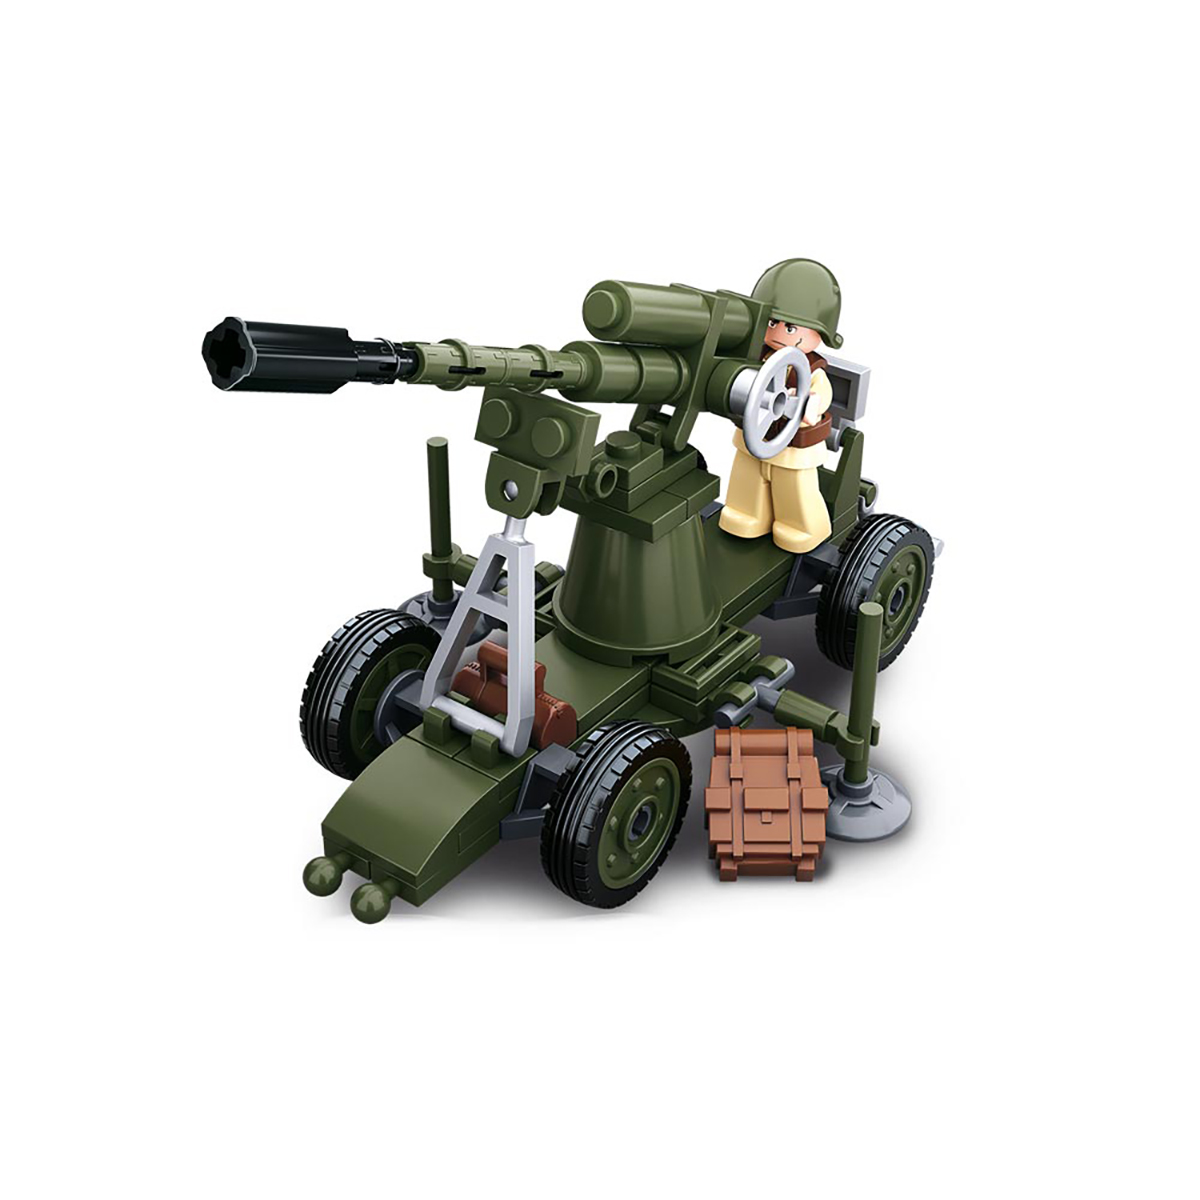 SLUBAN WWII - Mini-Bauset [M38-B0678C] Klemmbausteine Teile) Geschütz (77